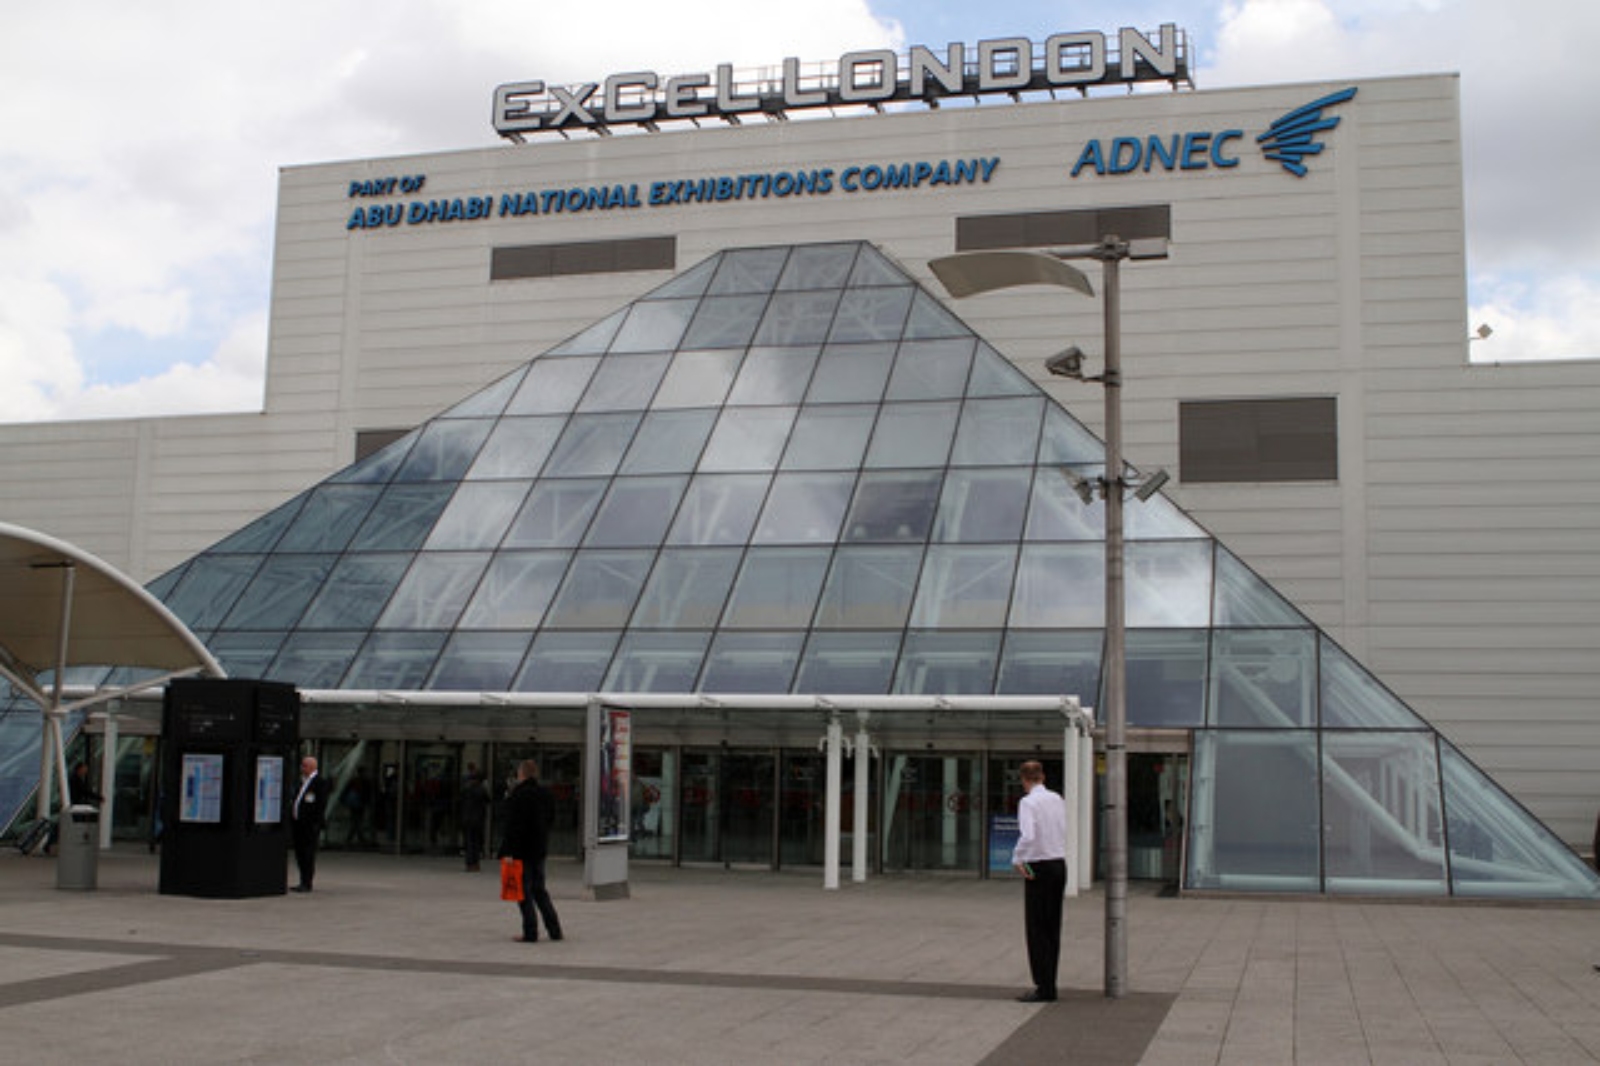 Excel London exhibition center